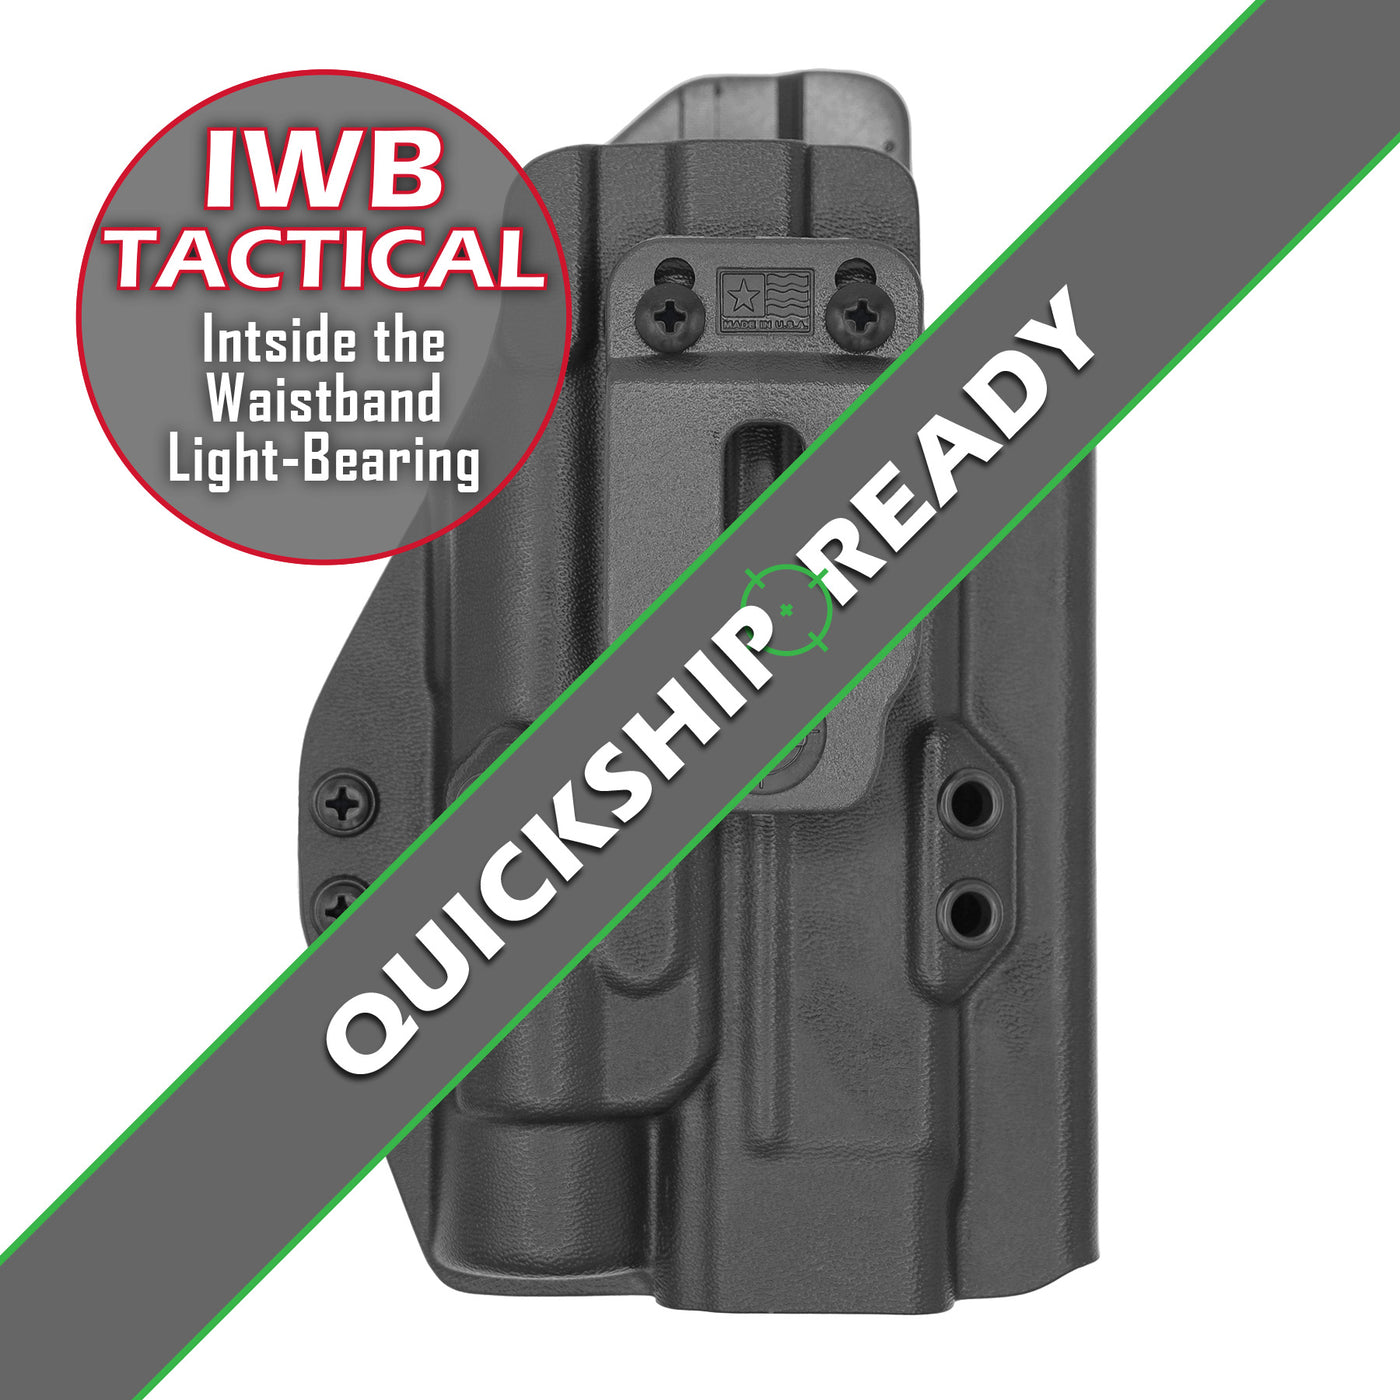 C&G Holsters Quickship IWB Tactical (Light-Bearing) Holster